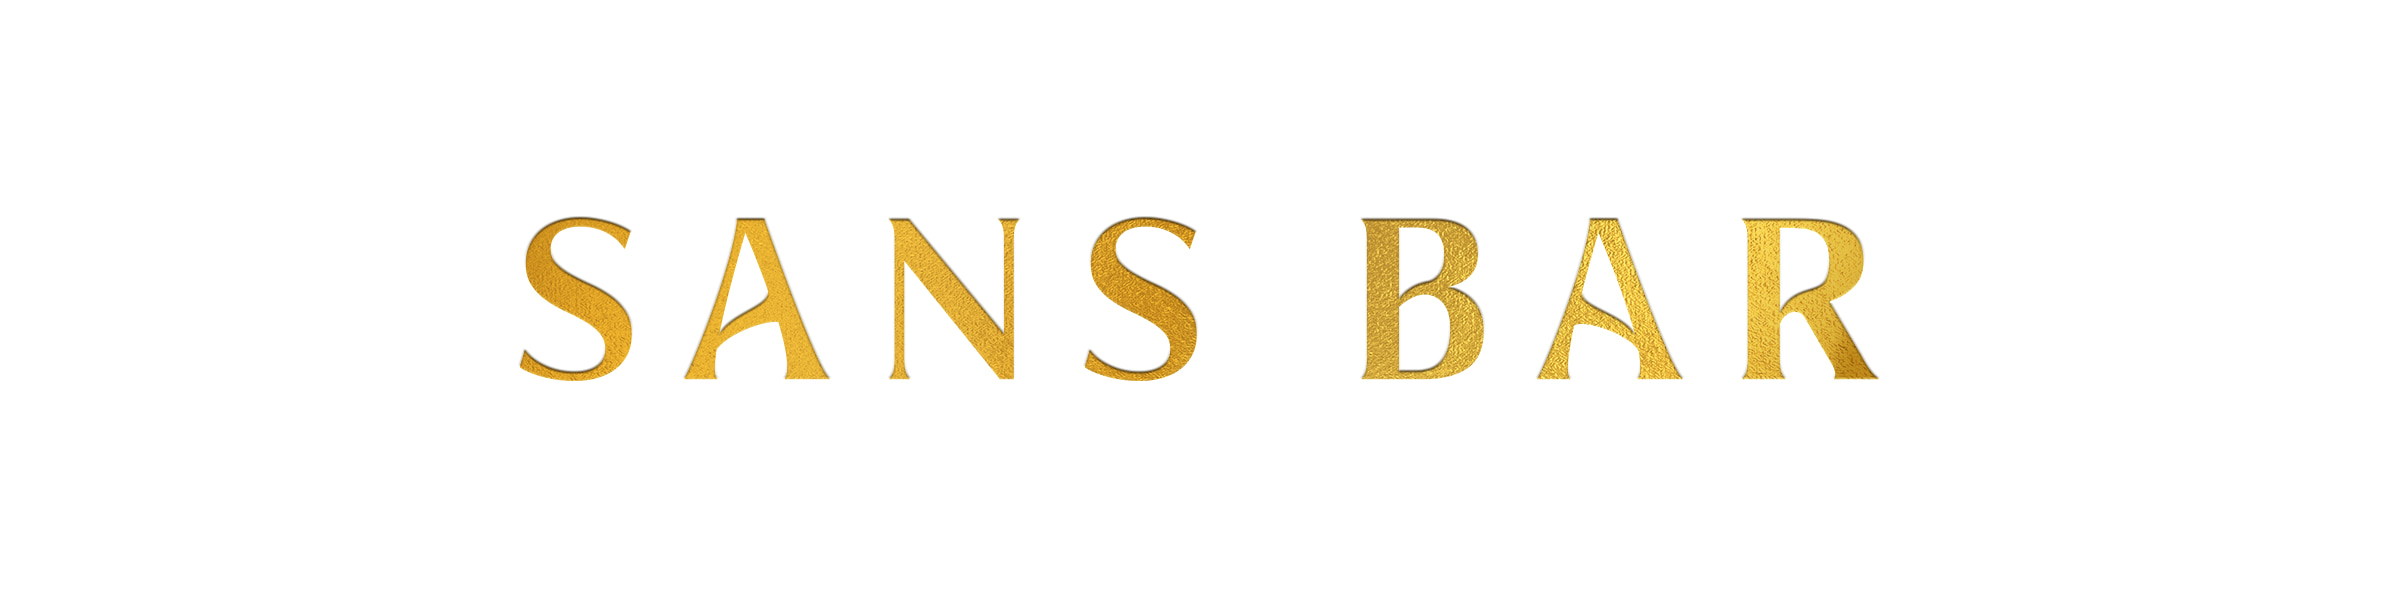 logo-gold-typography-lettering-spirits-range-boxer-and-co-marrickville-studio